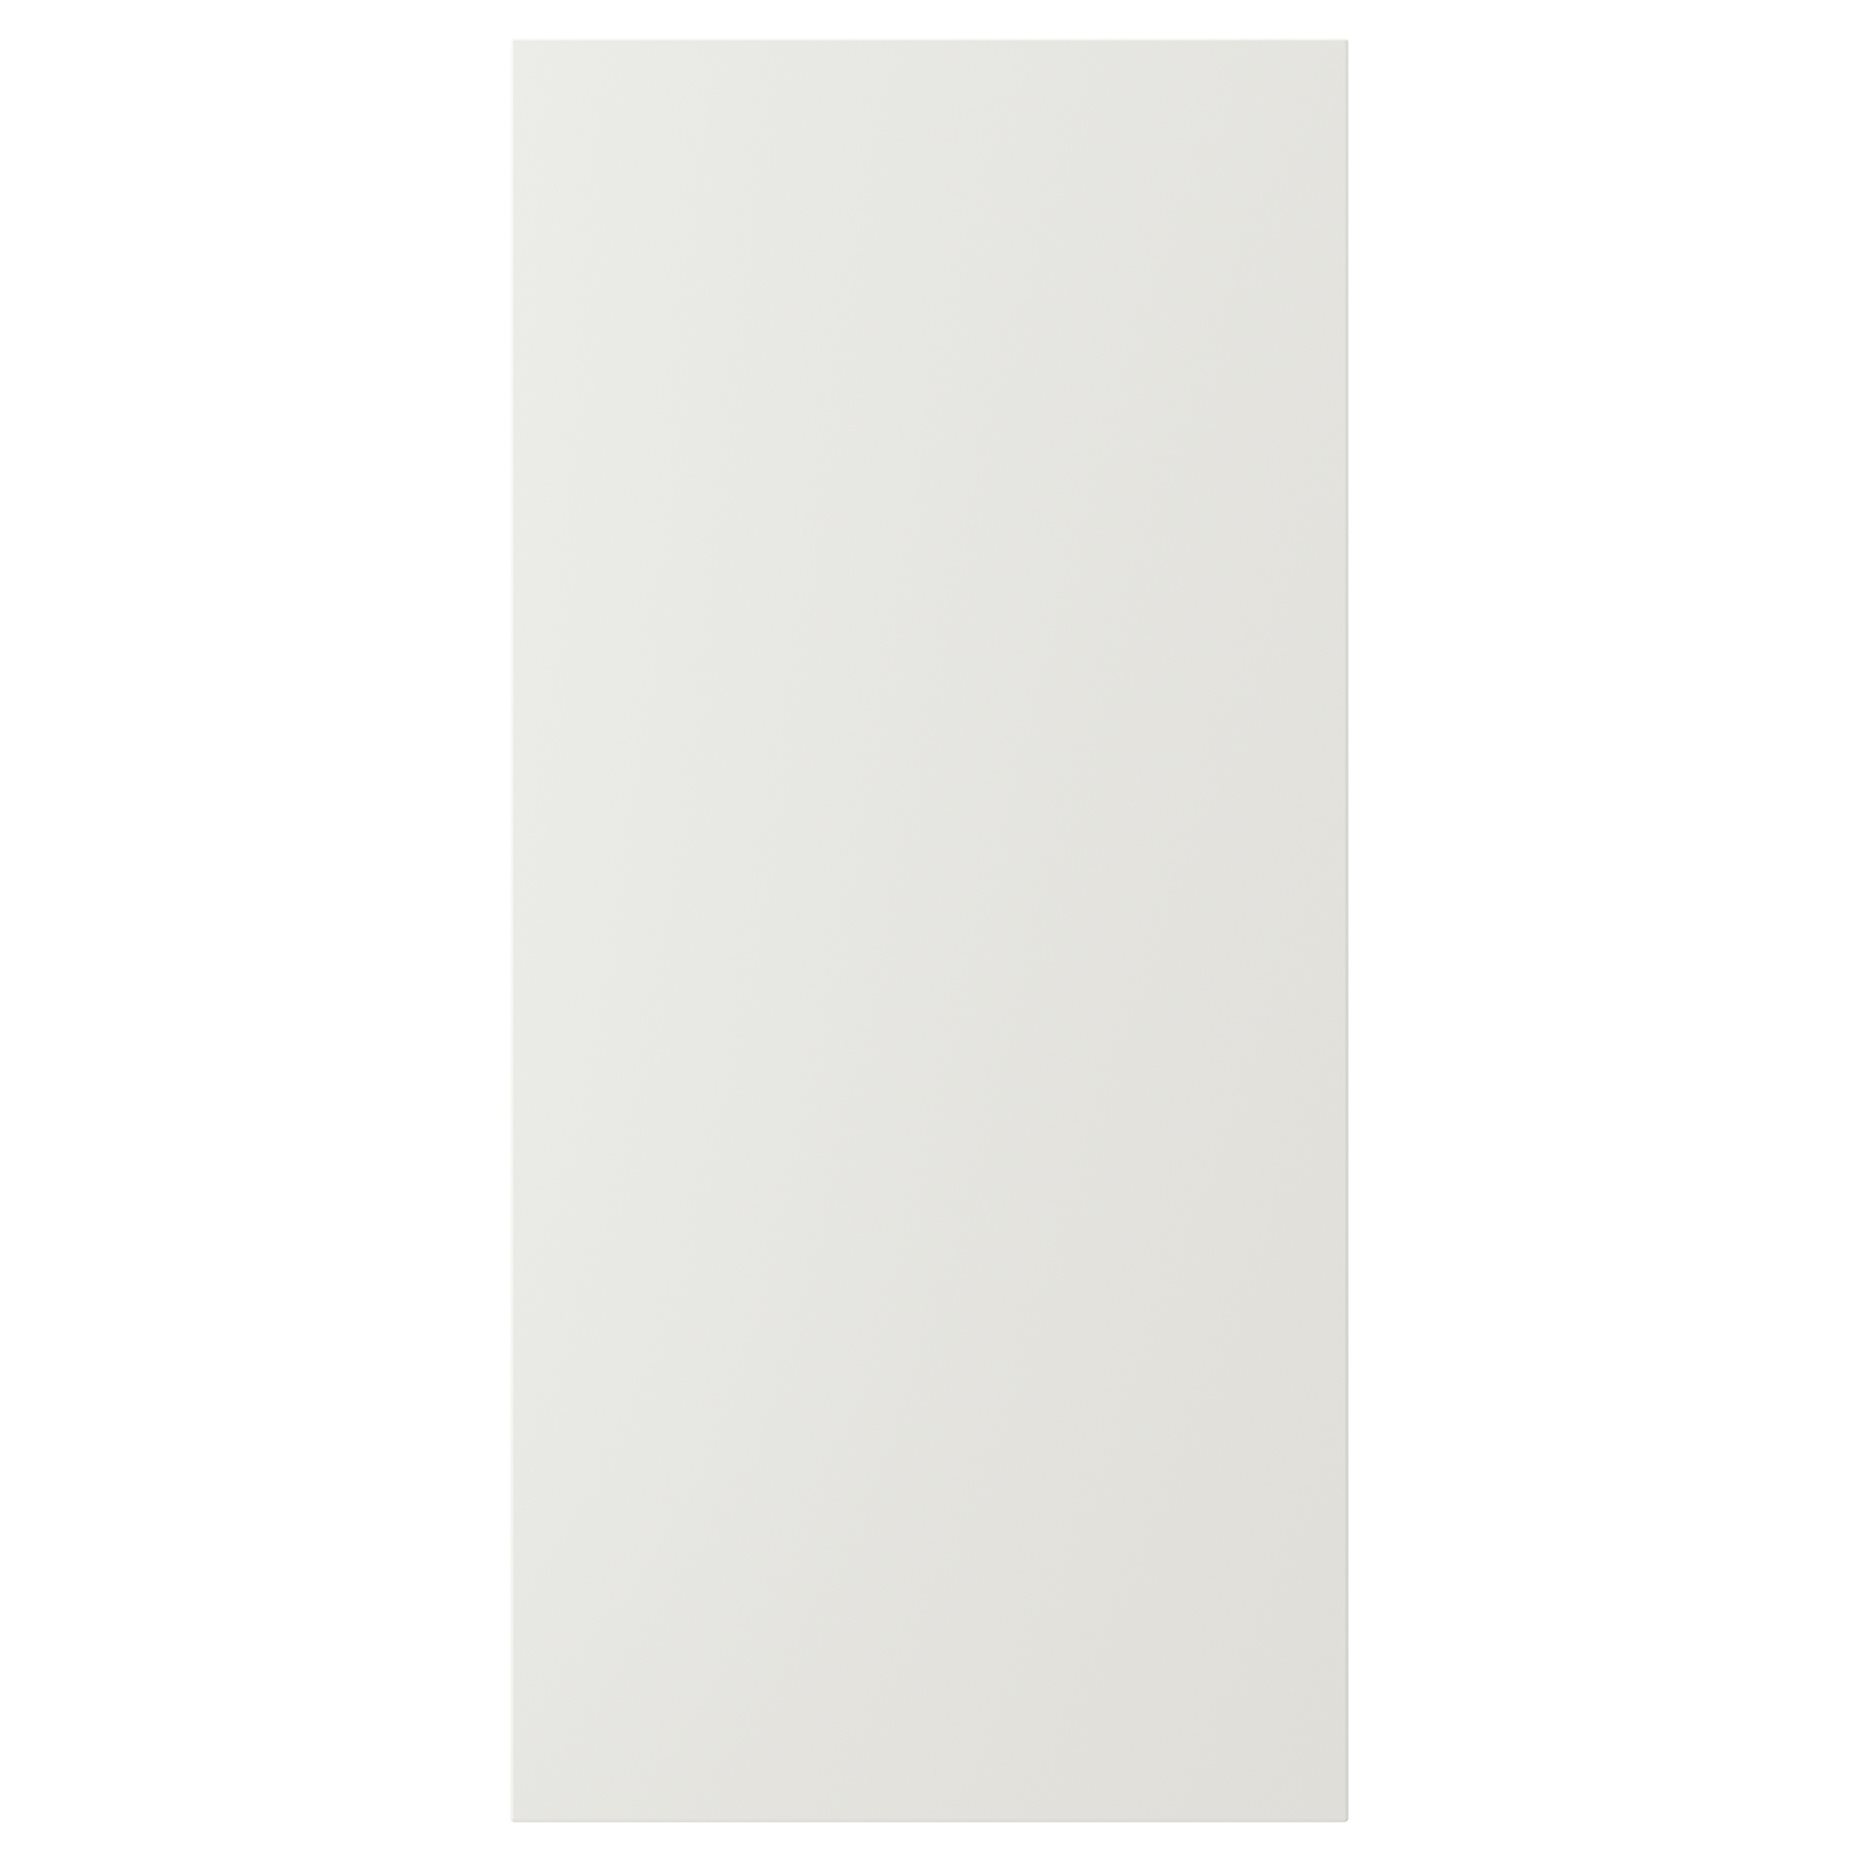 STENSUND, πλαϊνή επιφάνεια, 39x83 cm, 904.505.45